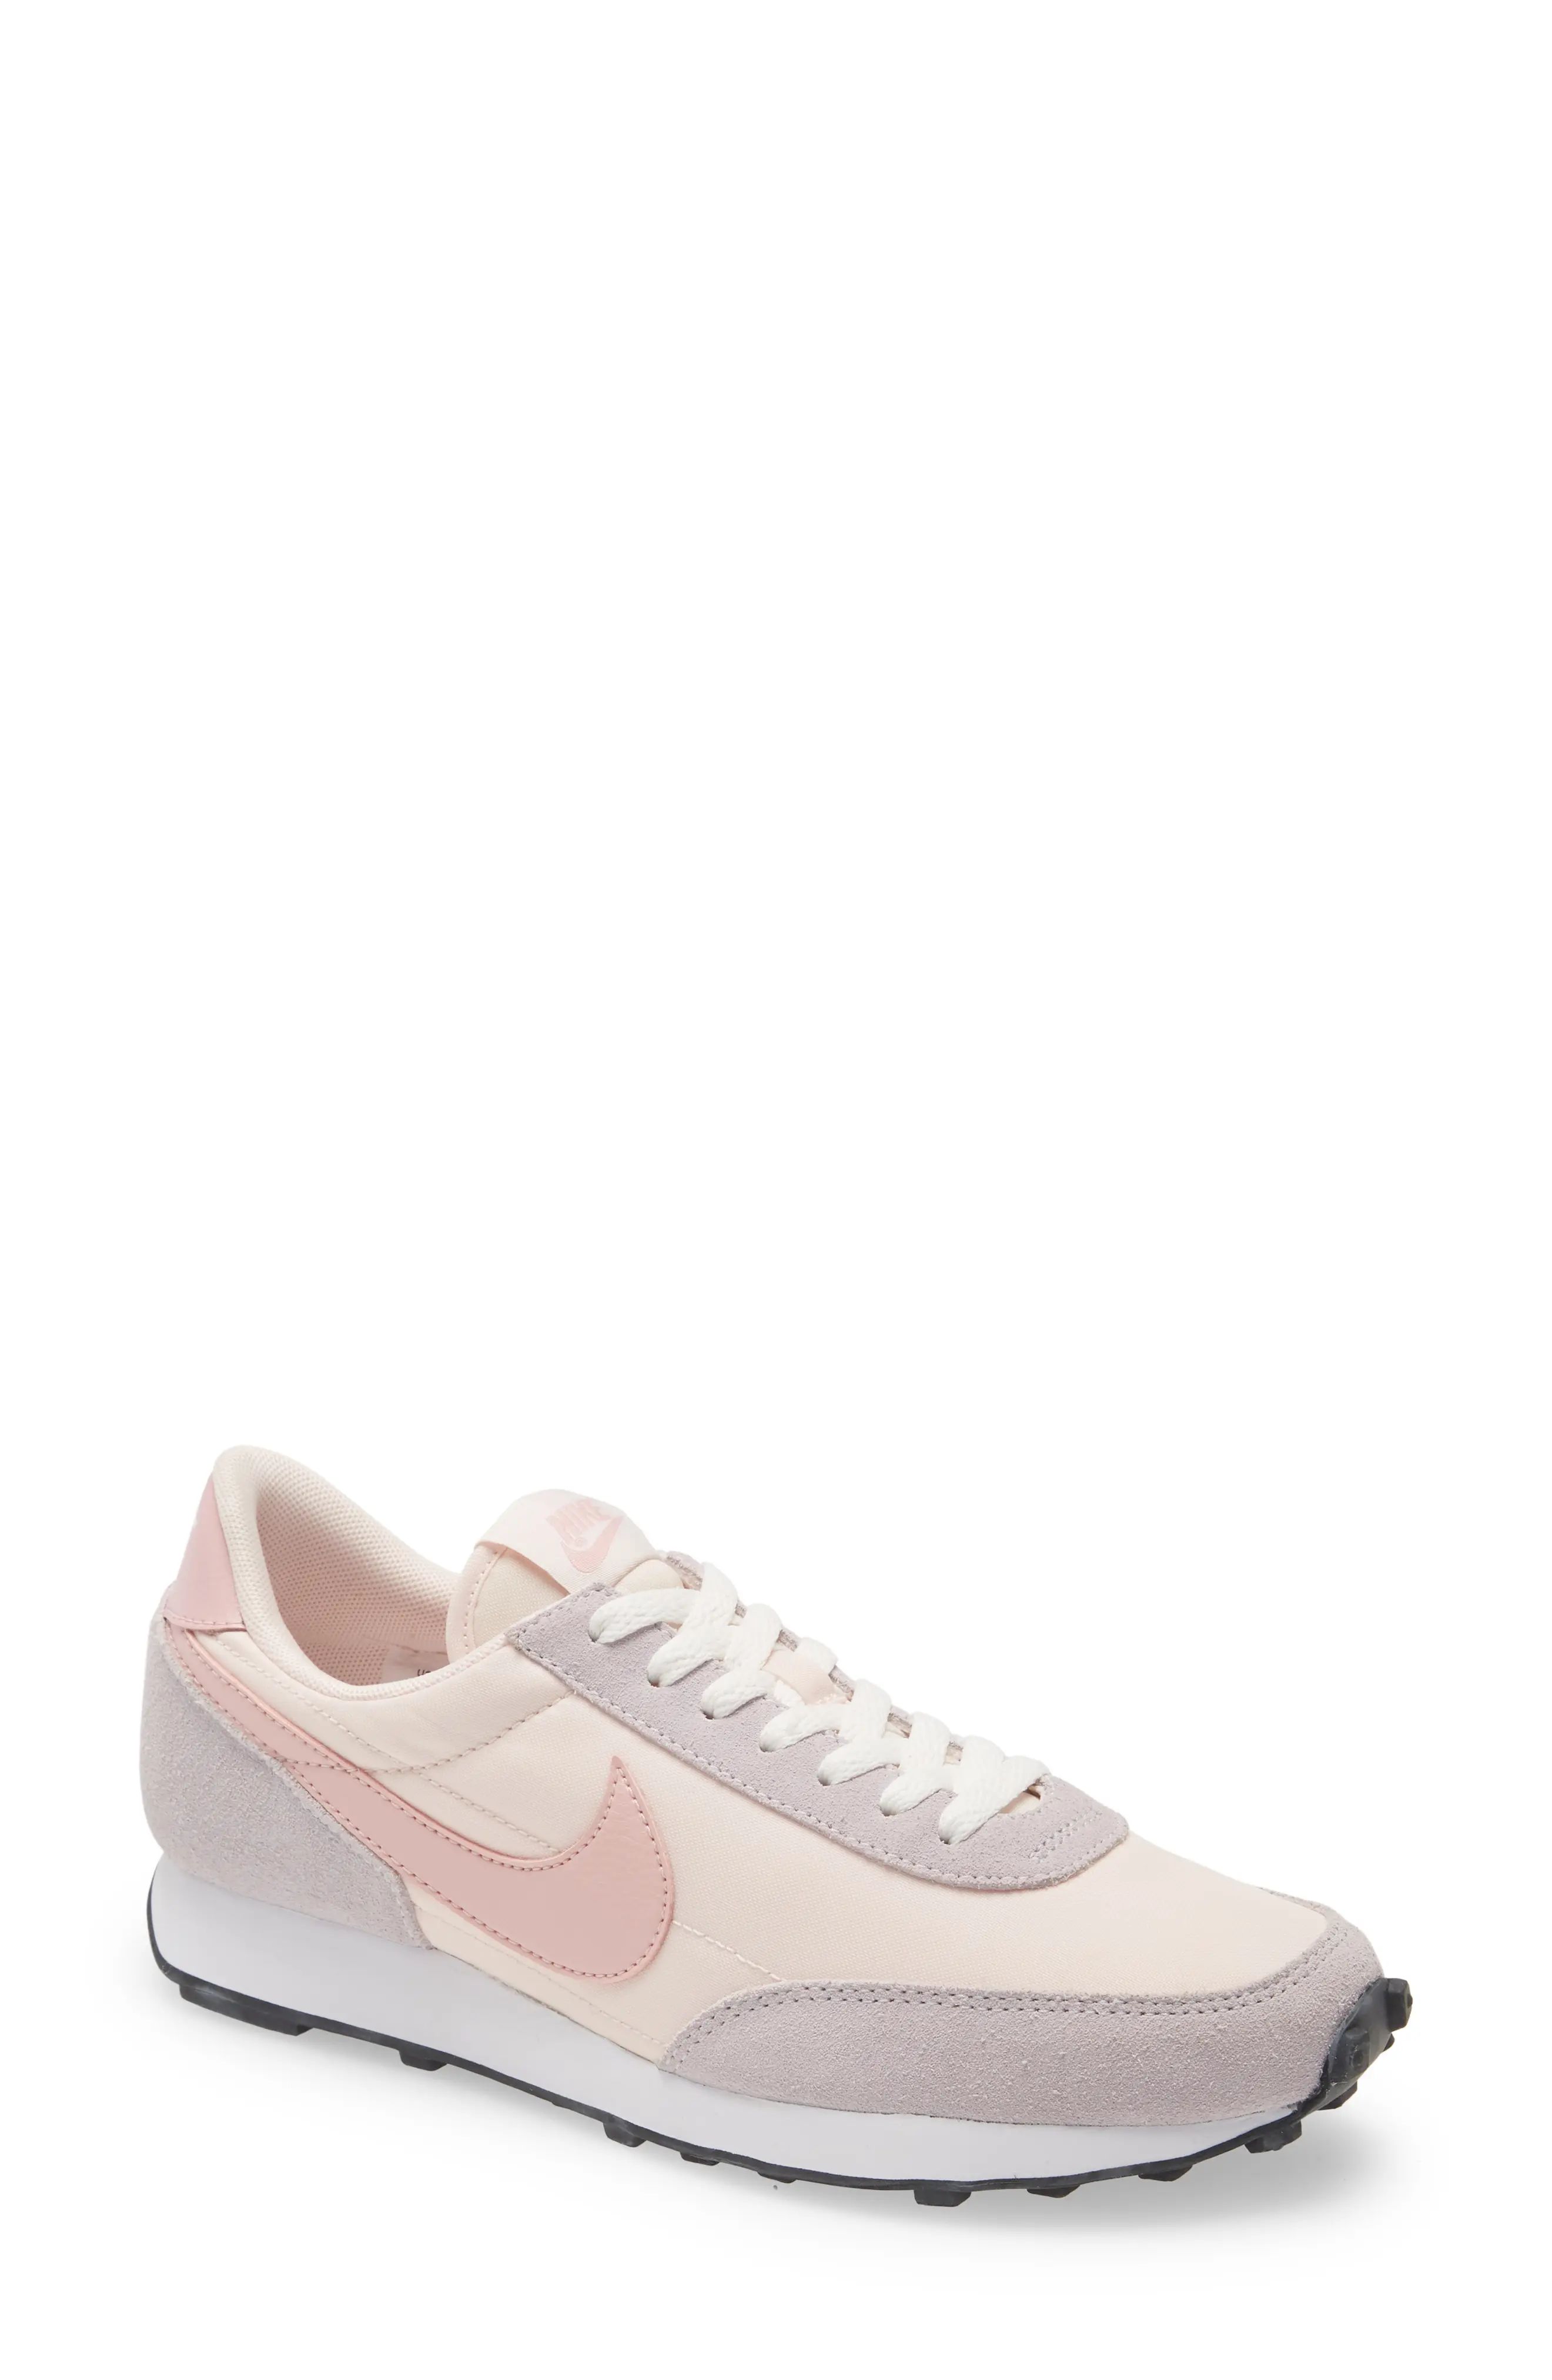 Nike Daybreak Sneaker, Size 8 in Soft Pink/Pink Glaze/Venice at Nordstrom | Nordstrom